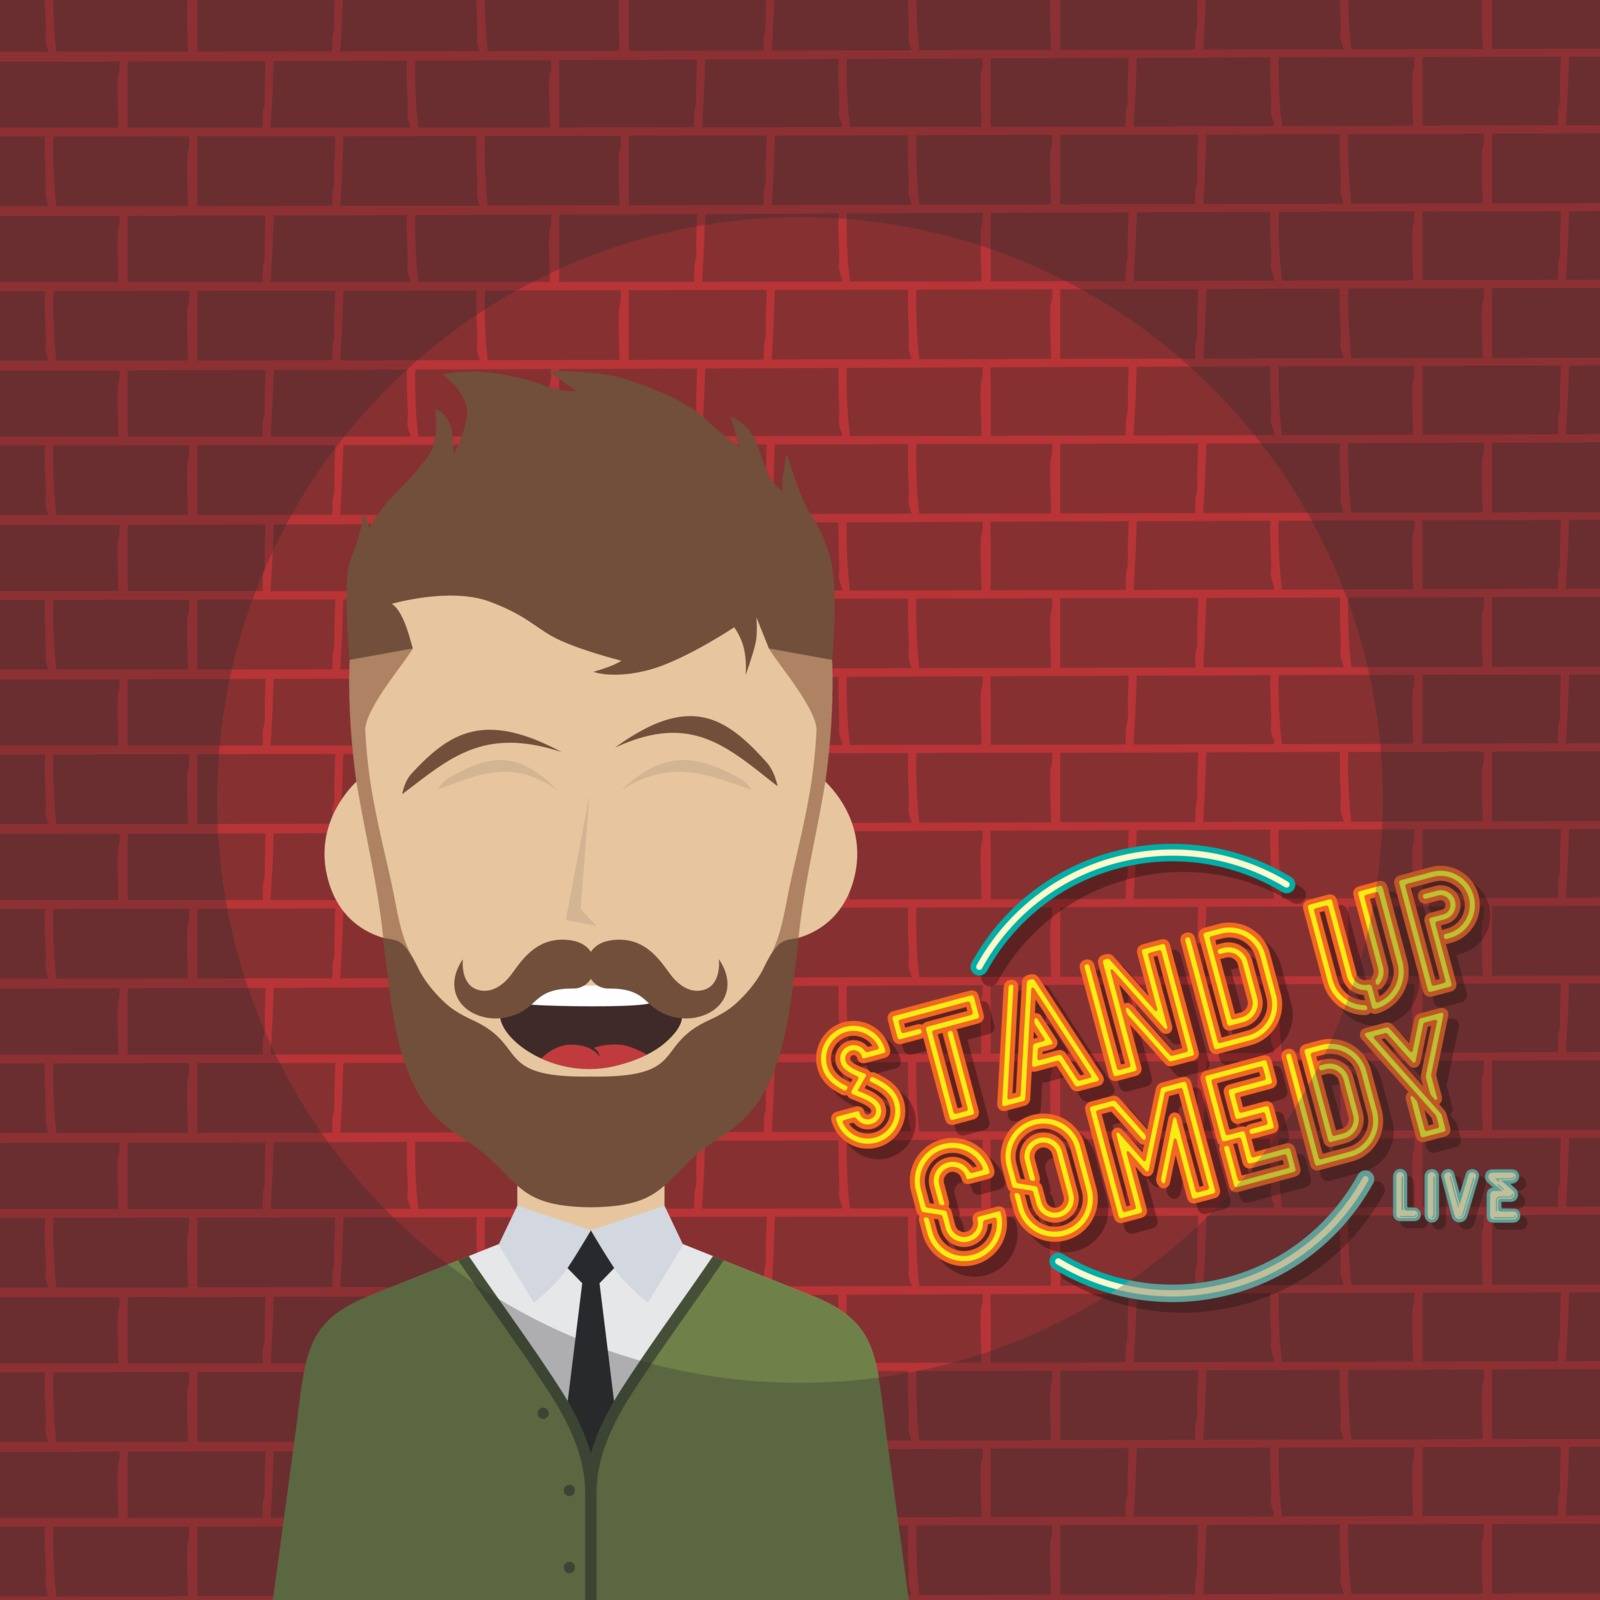 stand up comedy cartoon theme vector art illustration